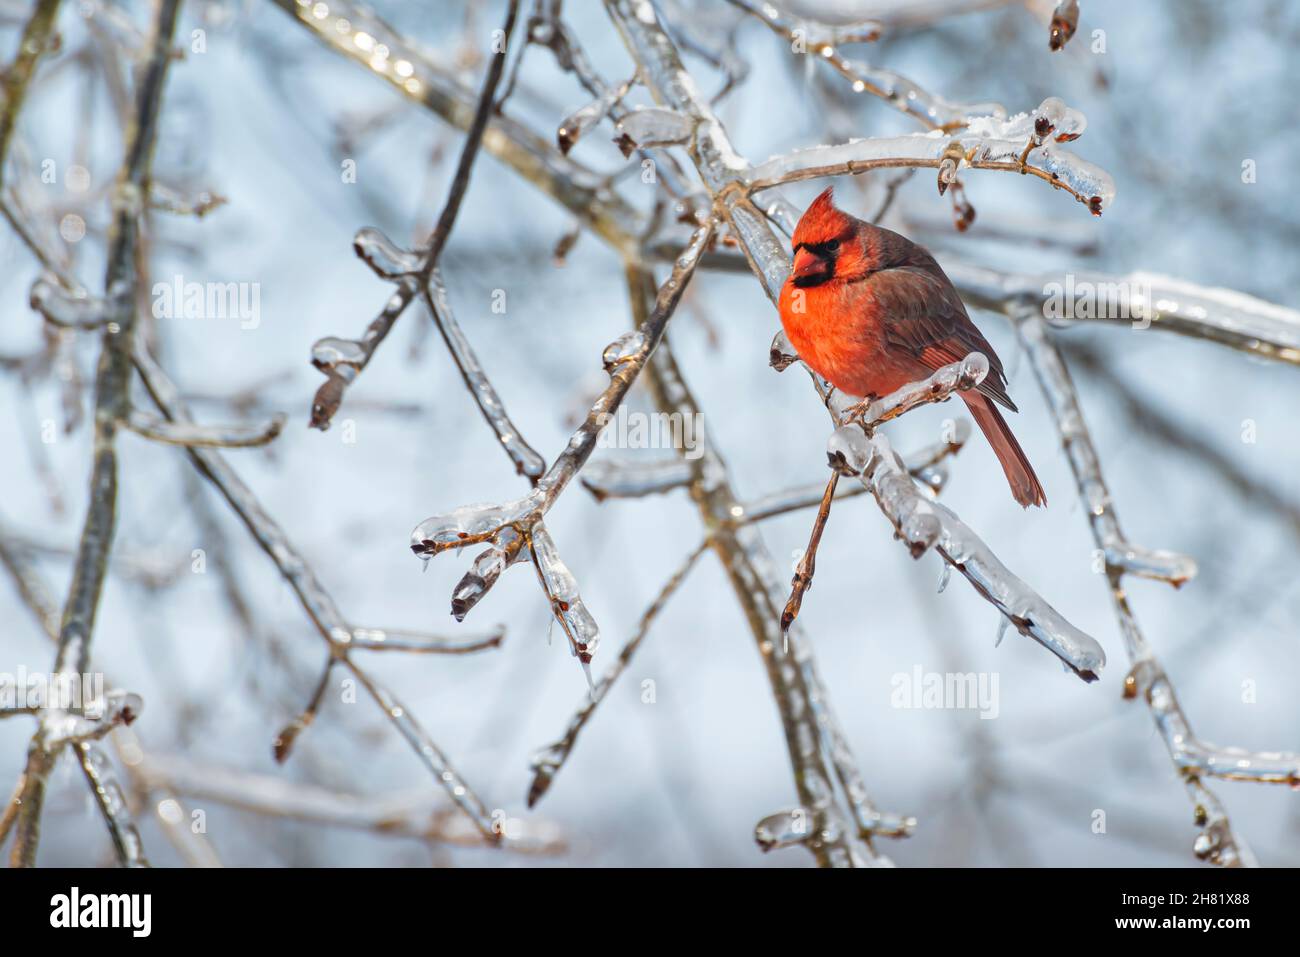 Male Northern Cardinal (Cardinalis cardinalis) perched on a snowy tree branch Stock Photo